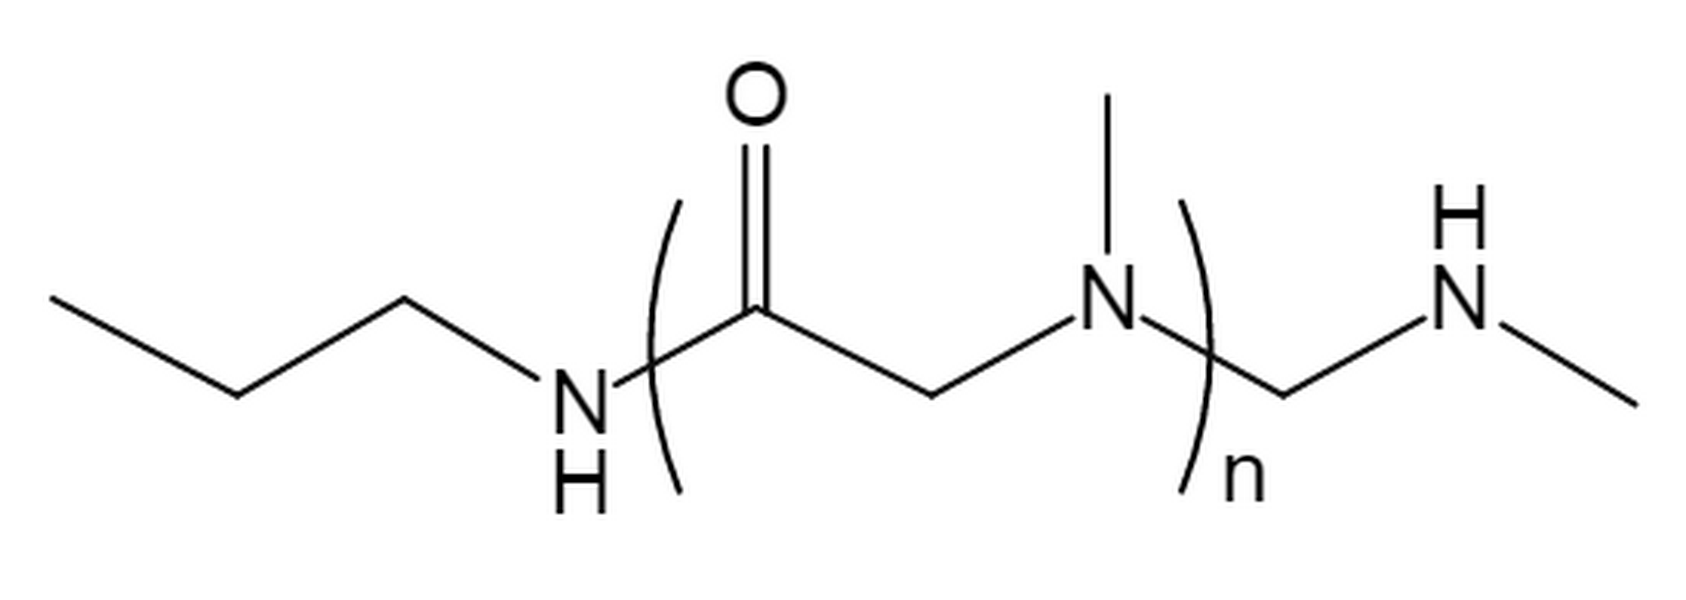 Polysarcosine150